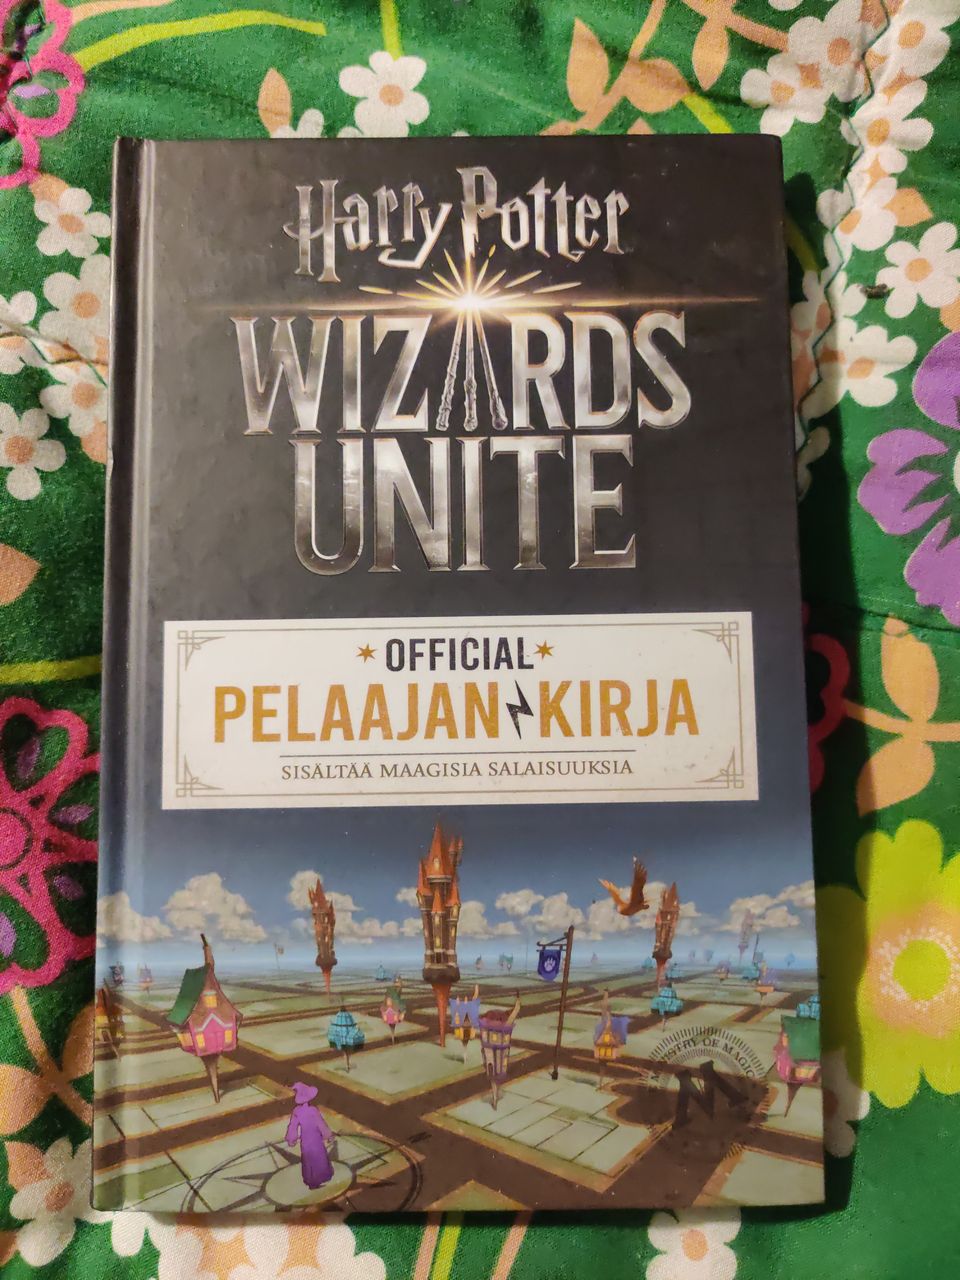 Harry Potter Wizards unite Official pelaajan kirja